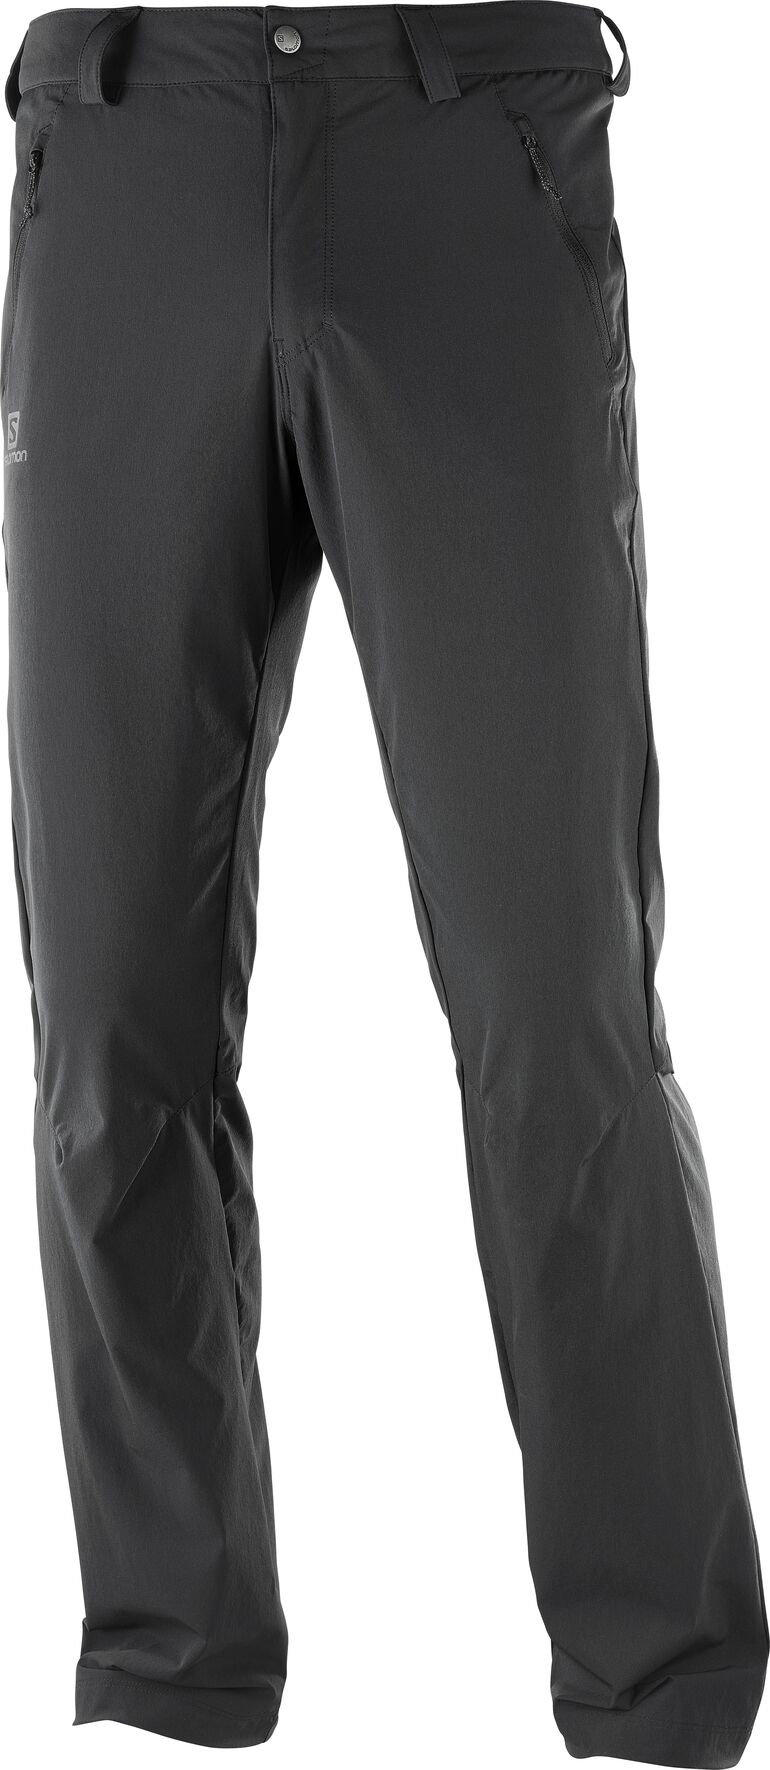 Salomon - Wayfarer LT Pant M - Trekking trousers - Men's